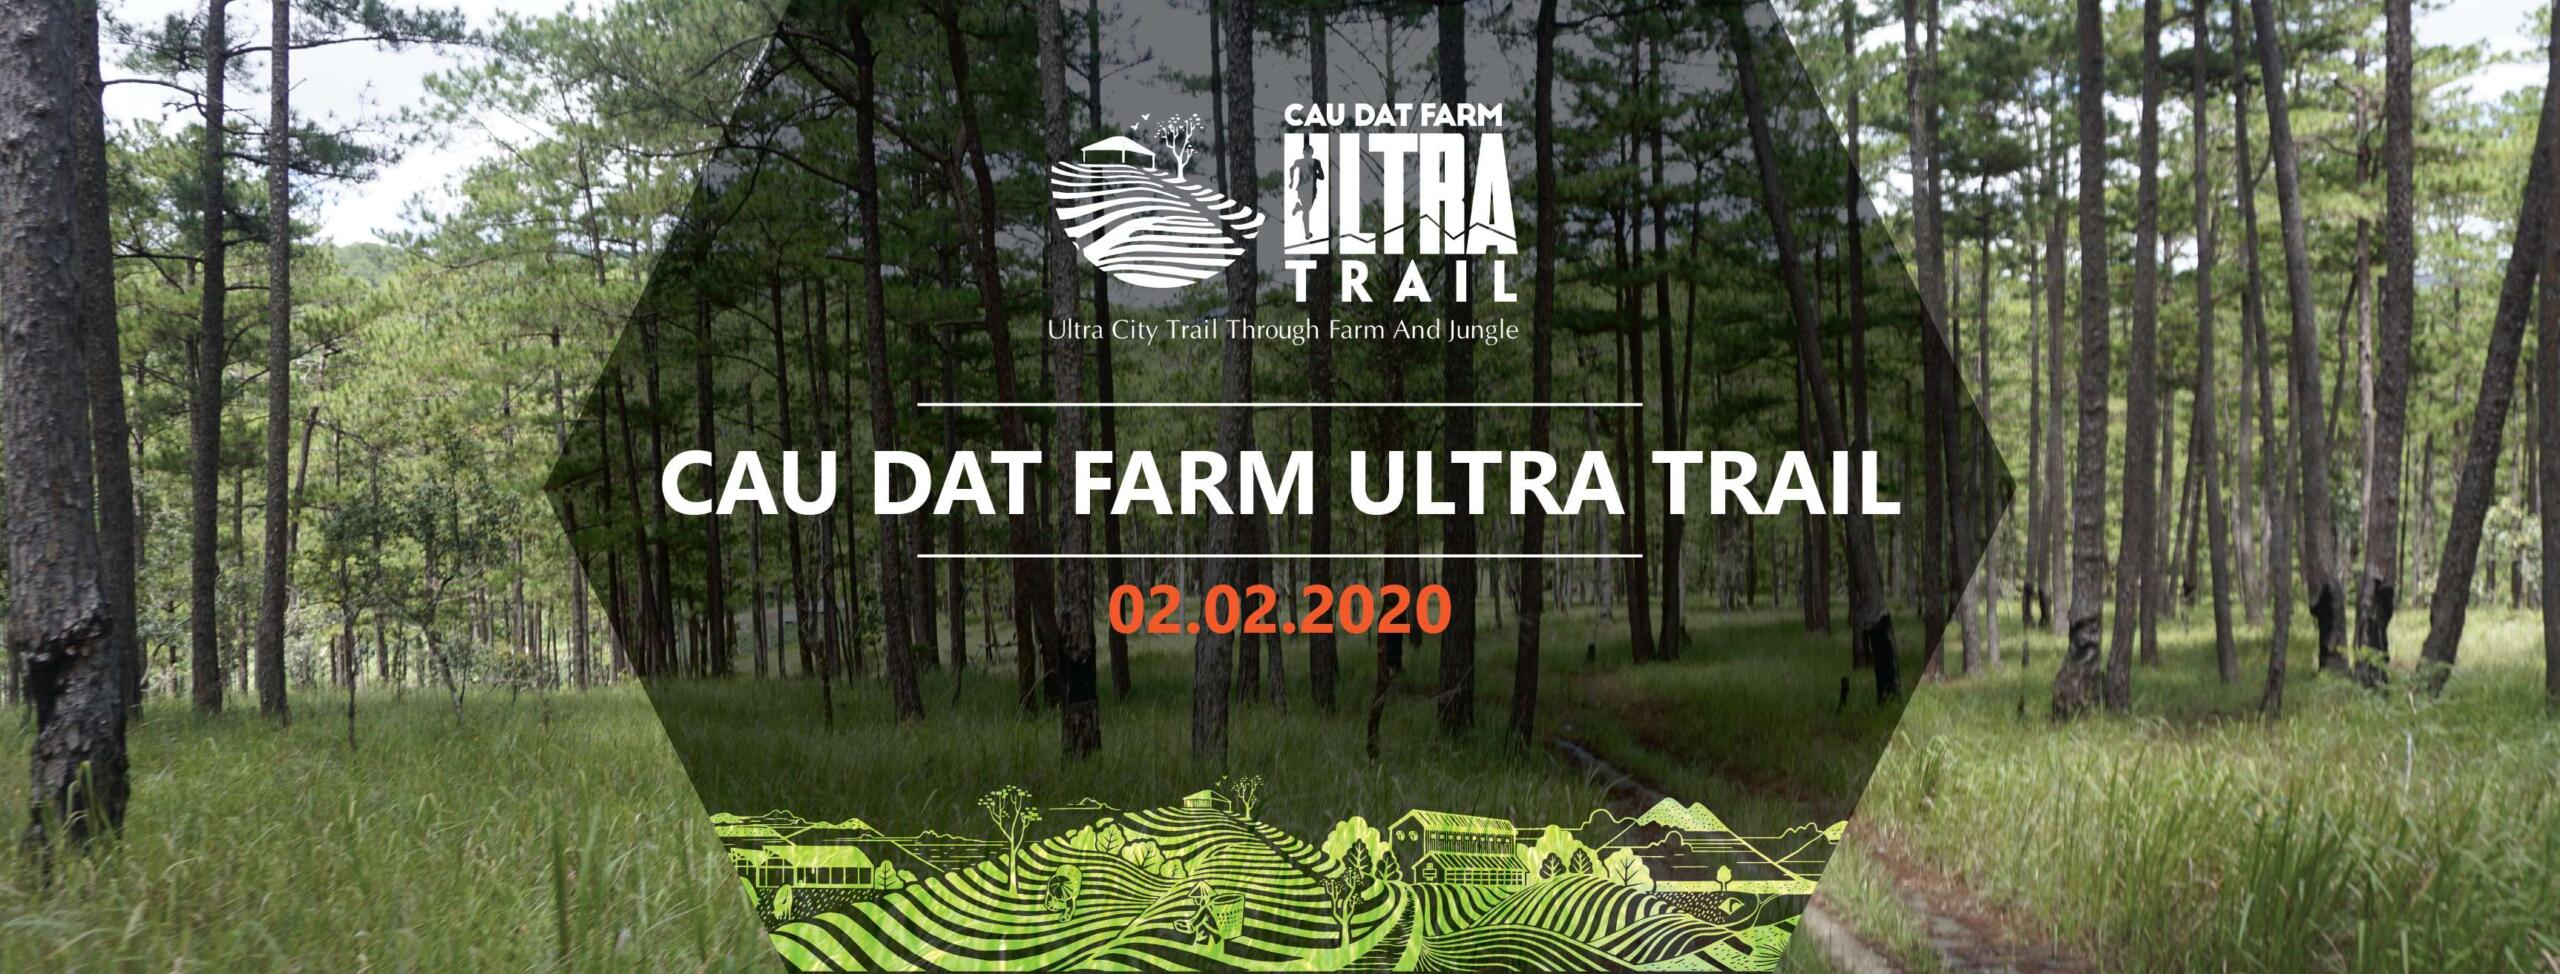 Cau Dat Farm Ultra Trail 2020 - cau dat farm ultra trail 2020 scaled